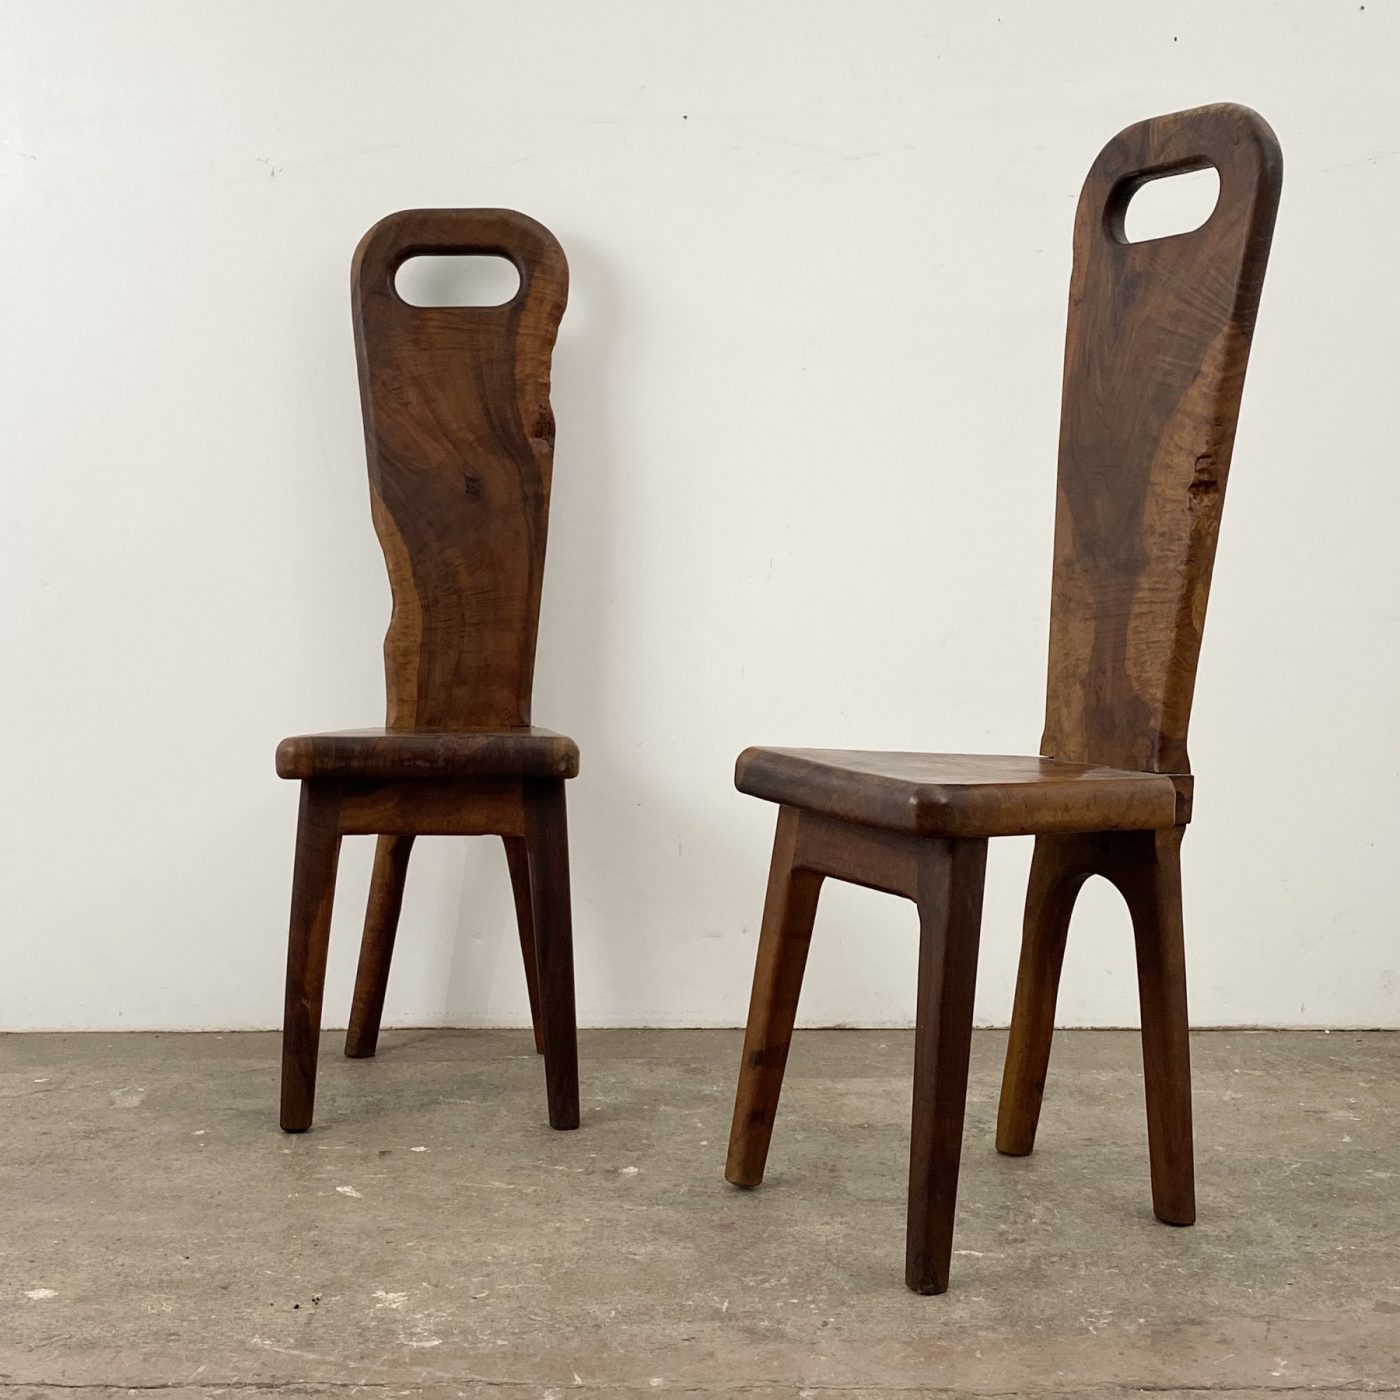 objet-vagabond-olive-chairs0005